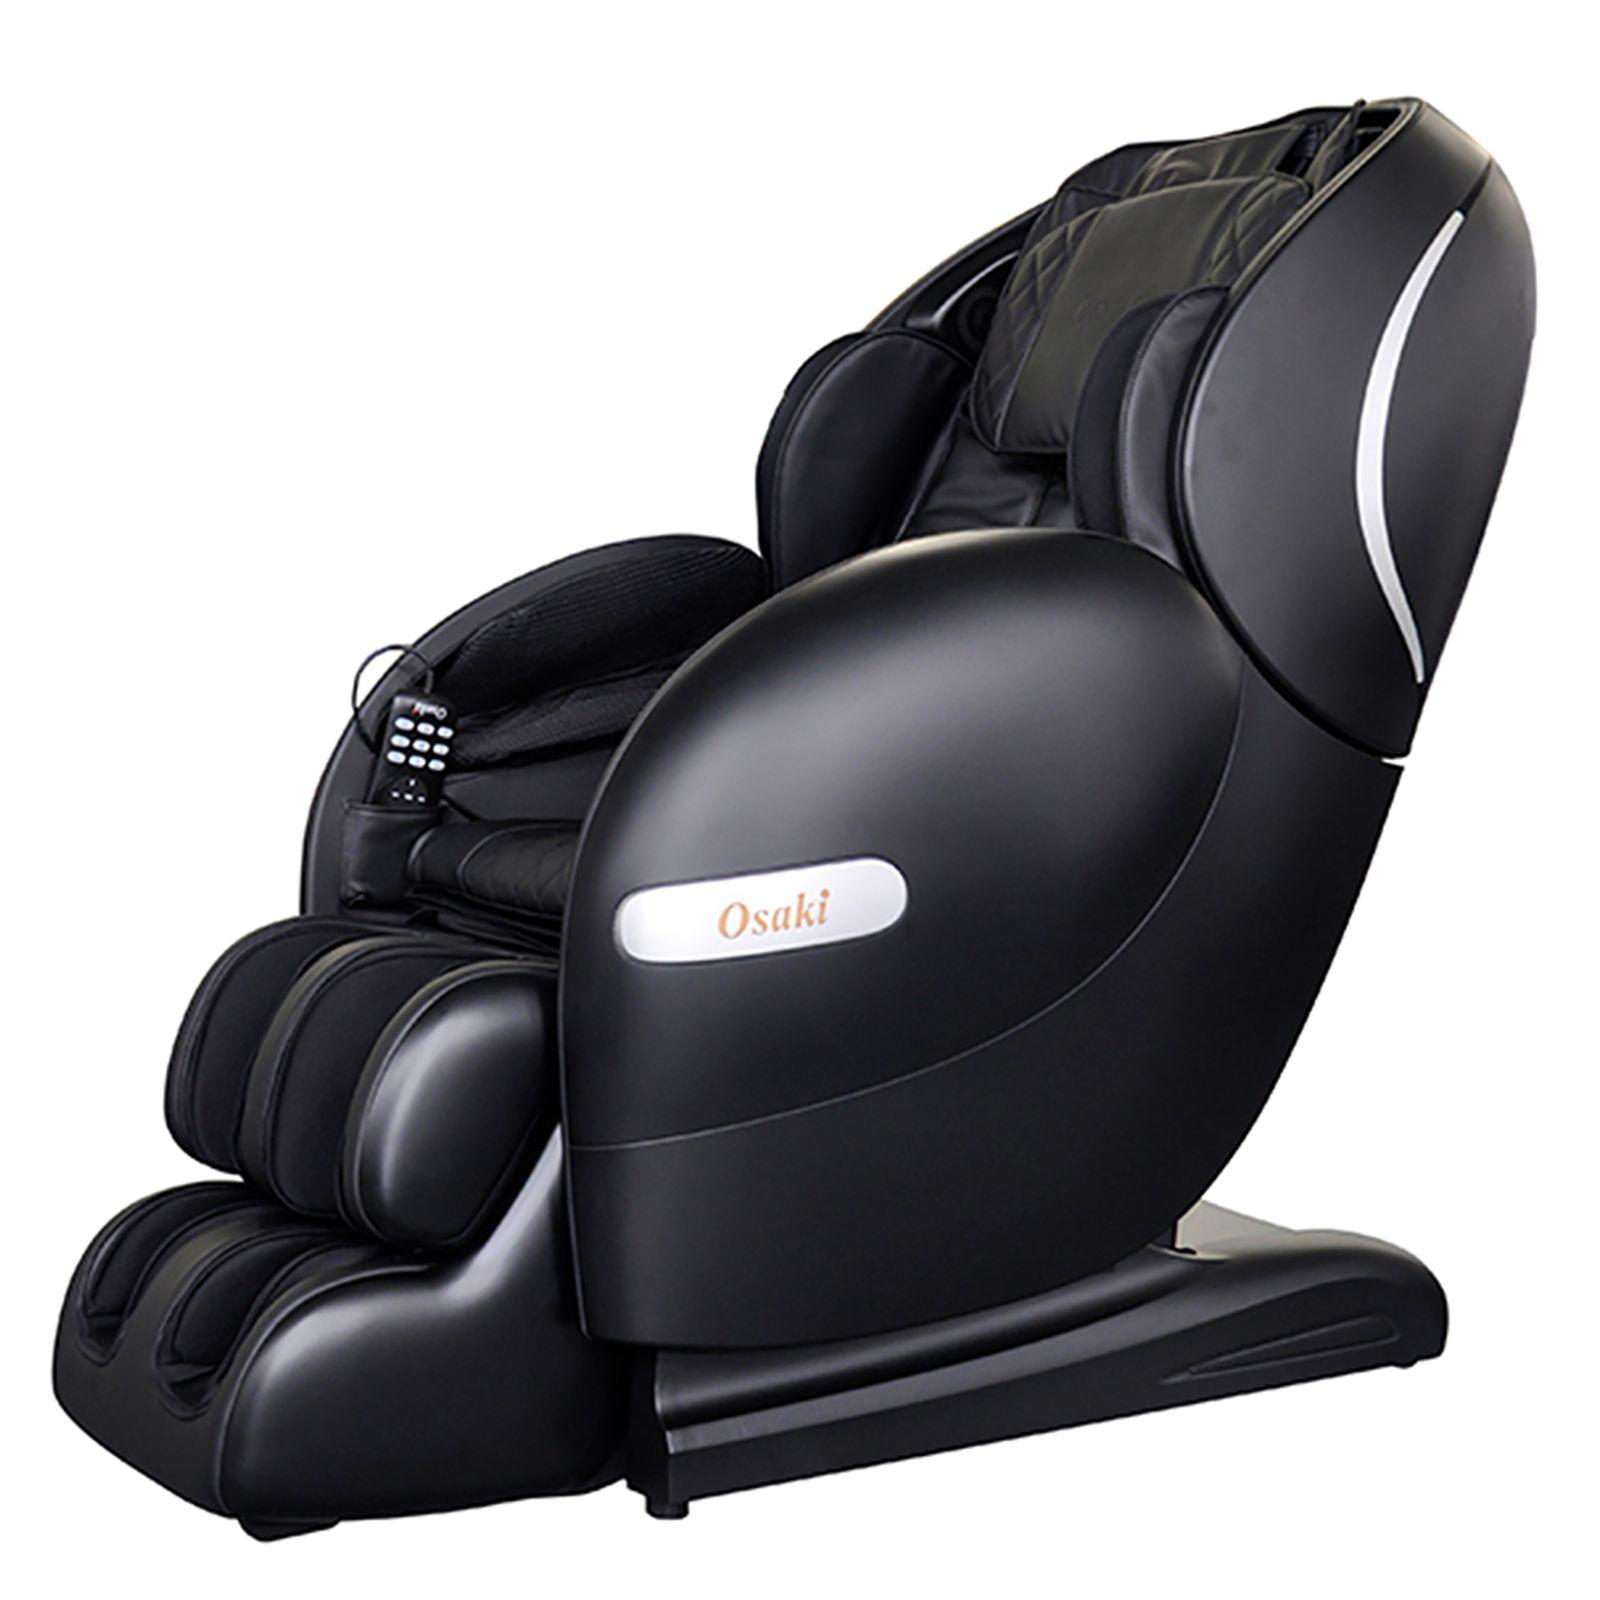 Osaki Monarch Massage Chair - Black